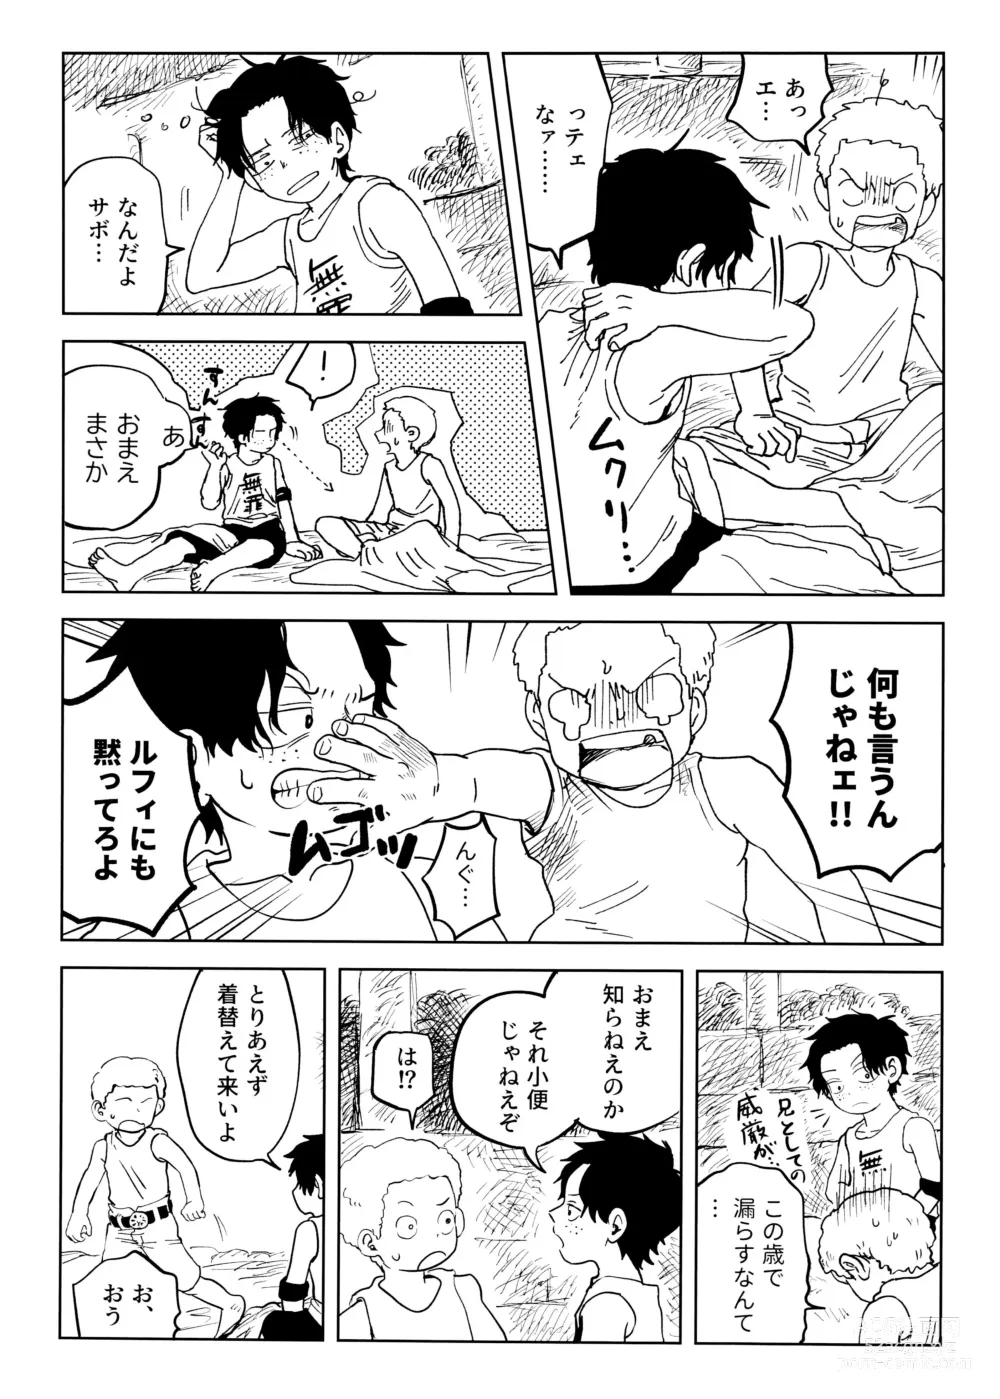 Page 14 of doujinshi Himitsu no Colubo Yama